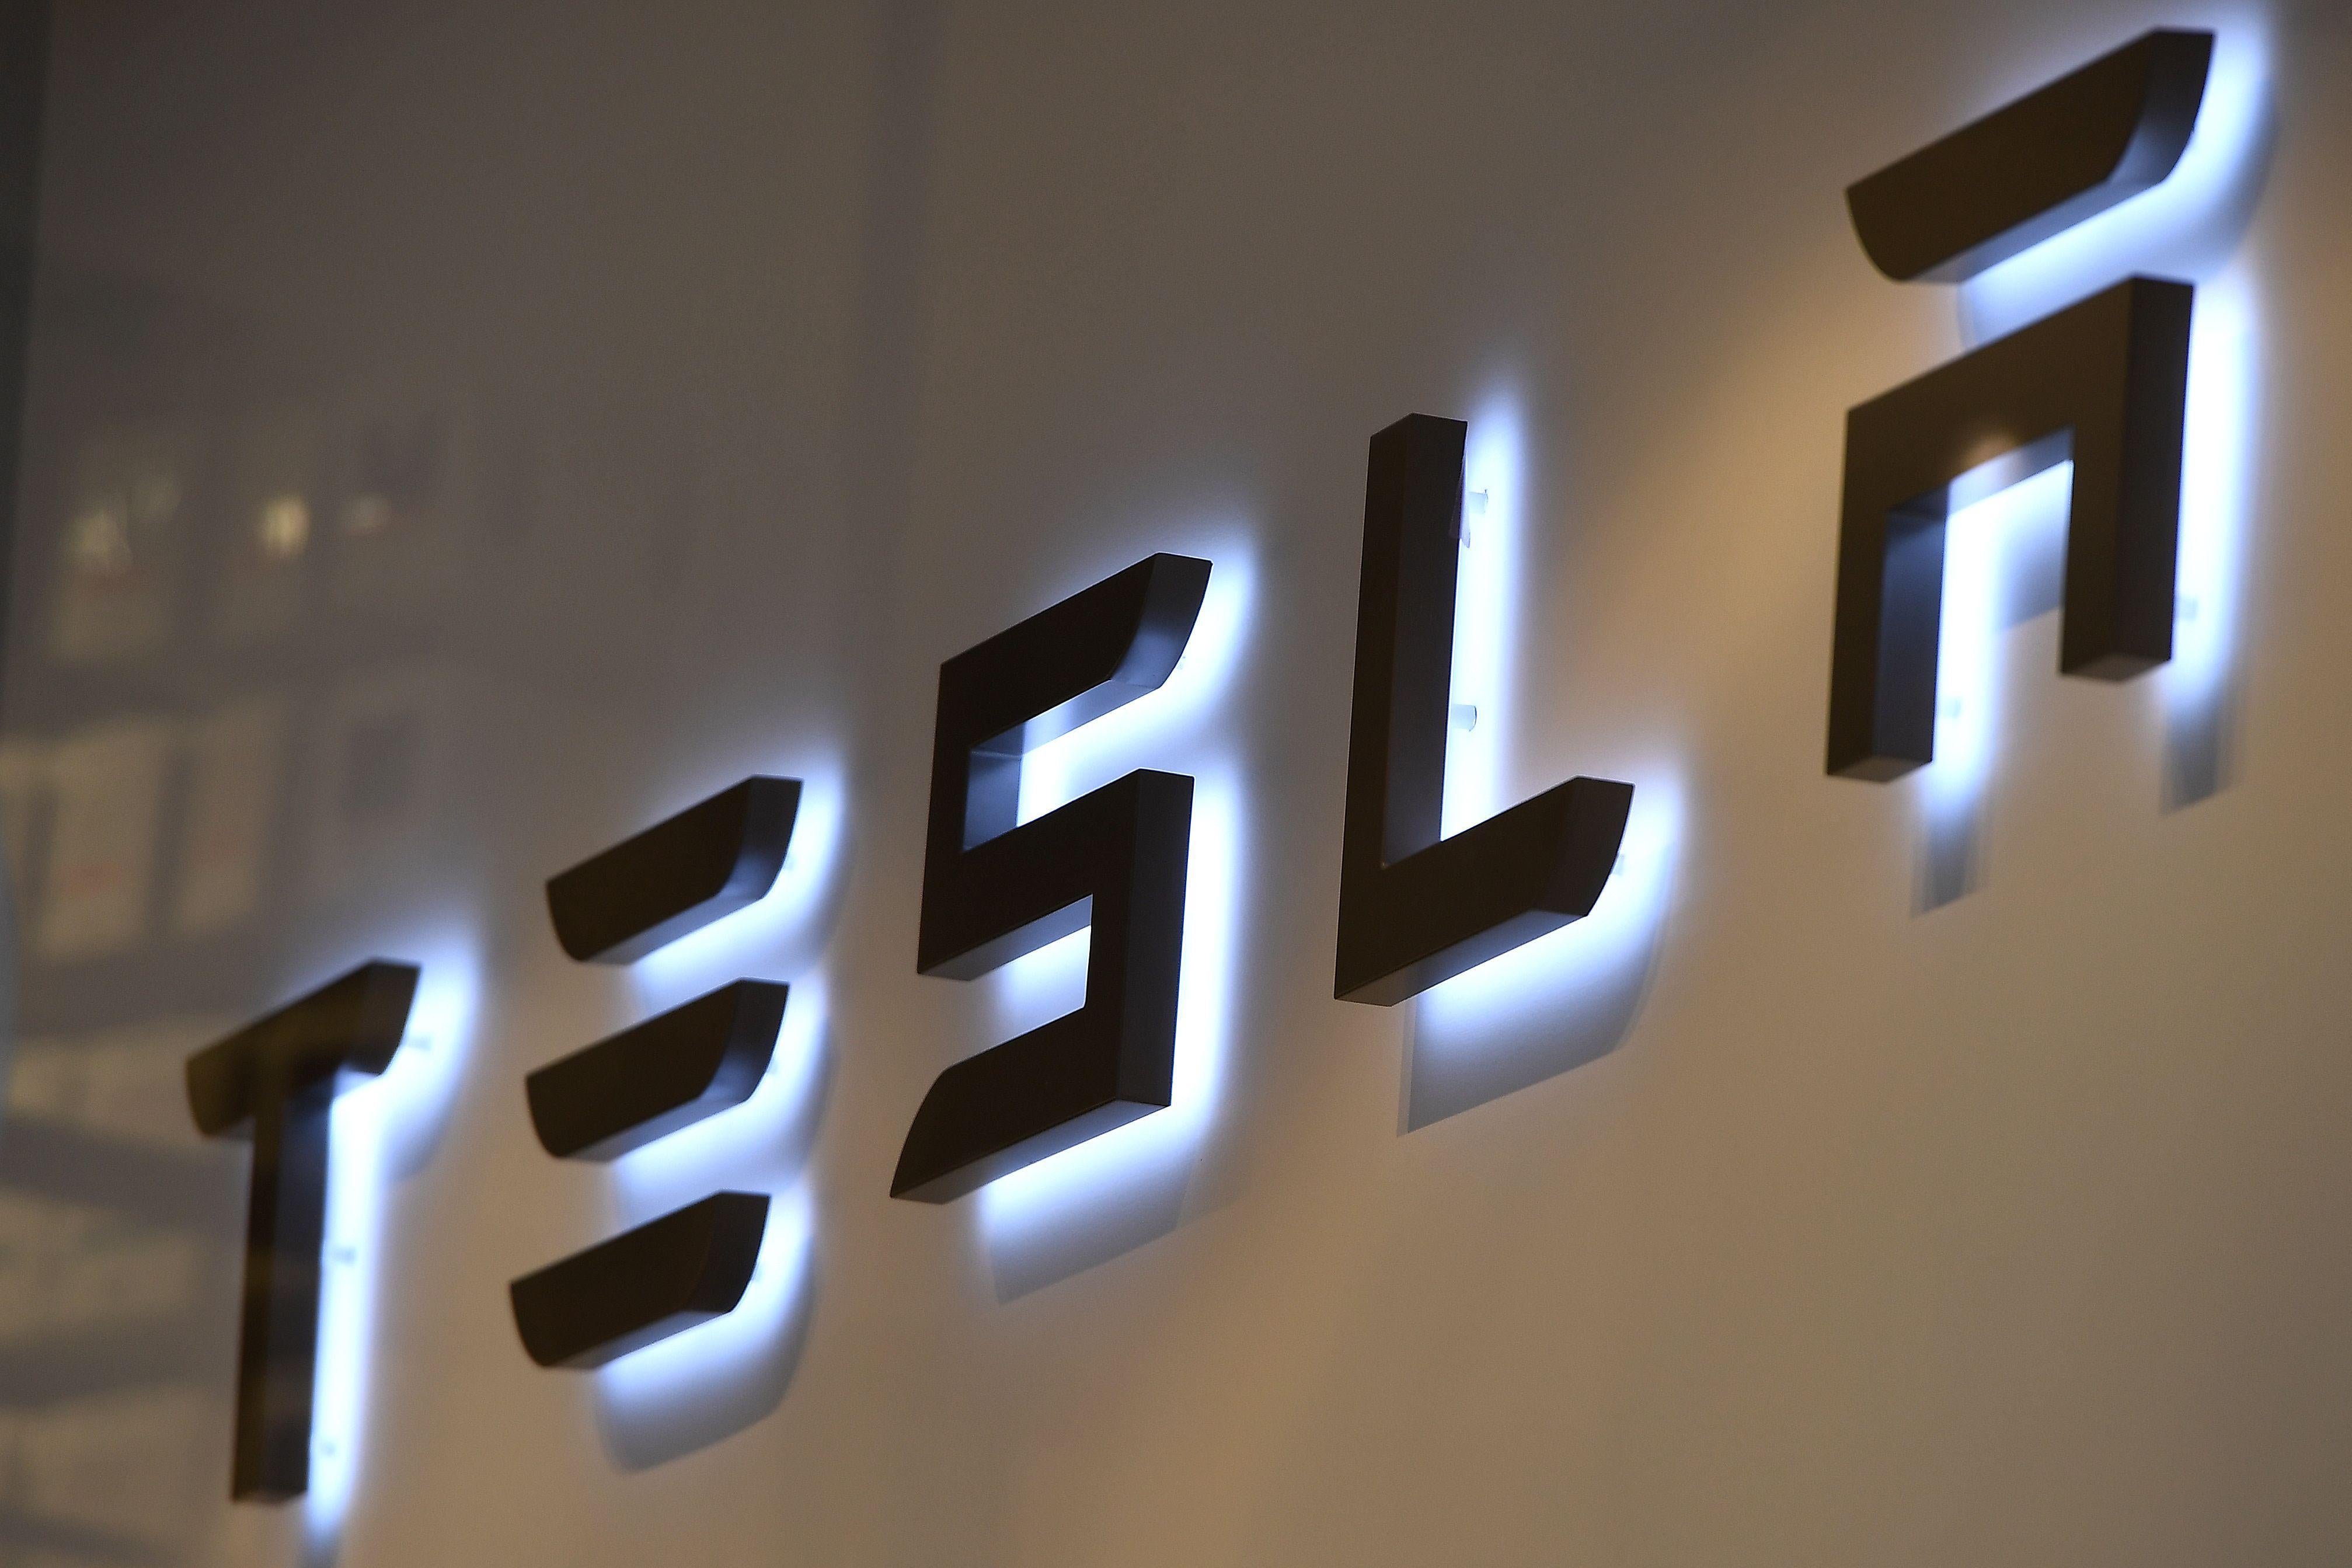 A Tesla sign.